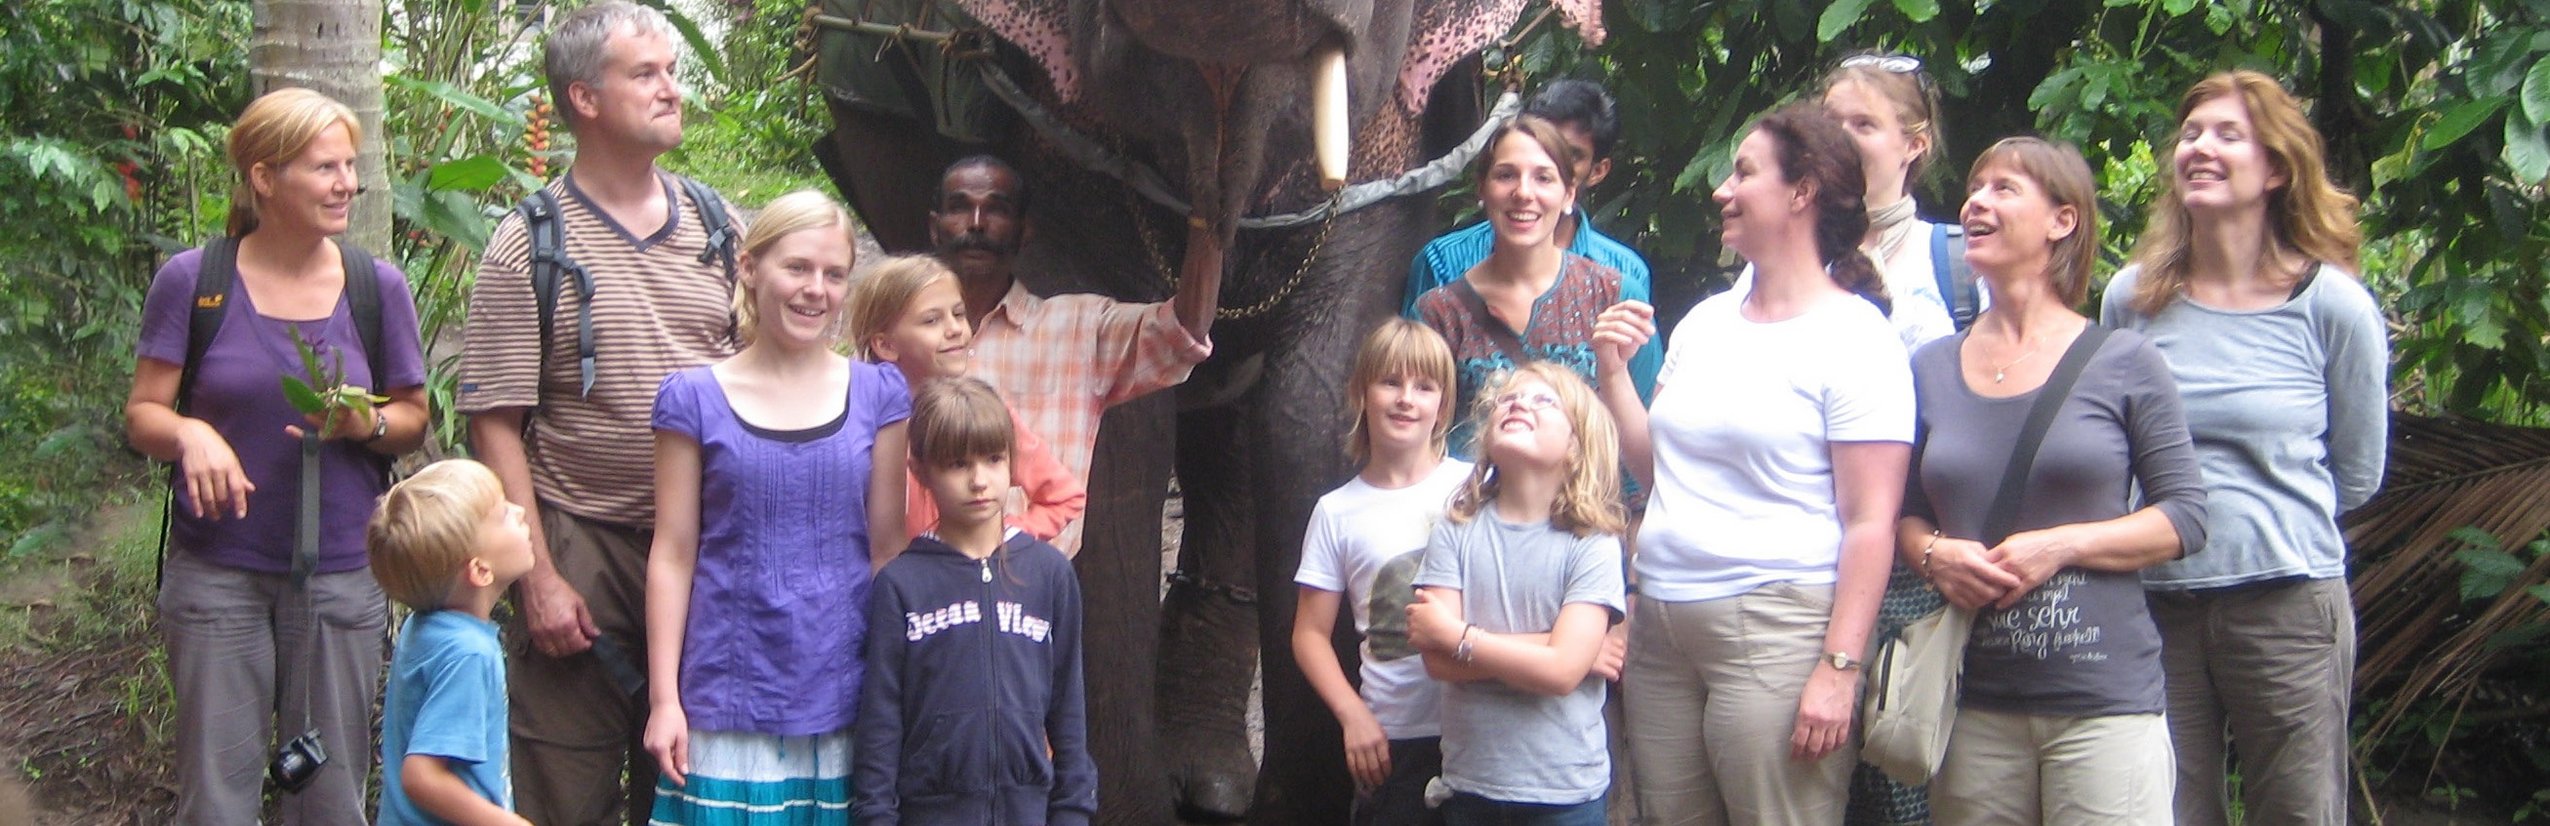 Indien Familienreise - Reisegruppe neben Elefant